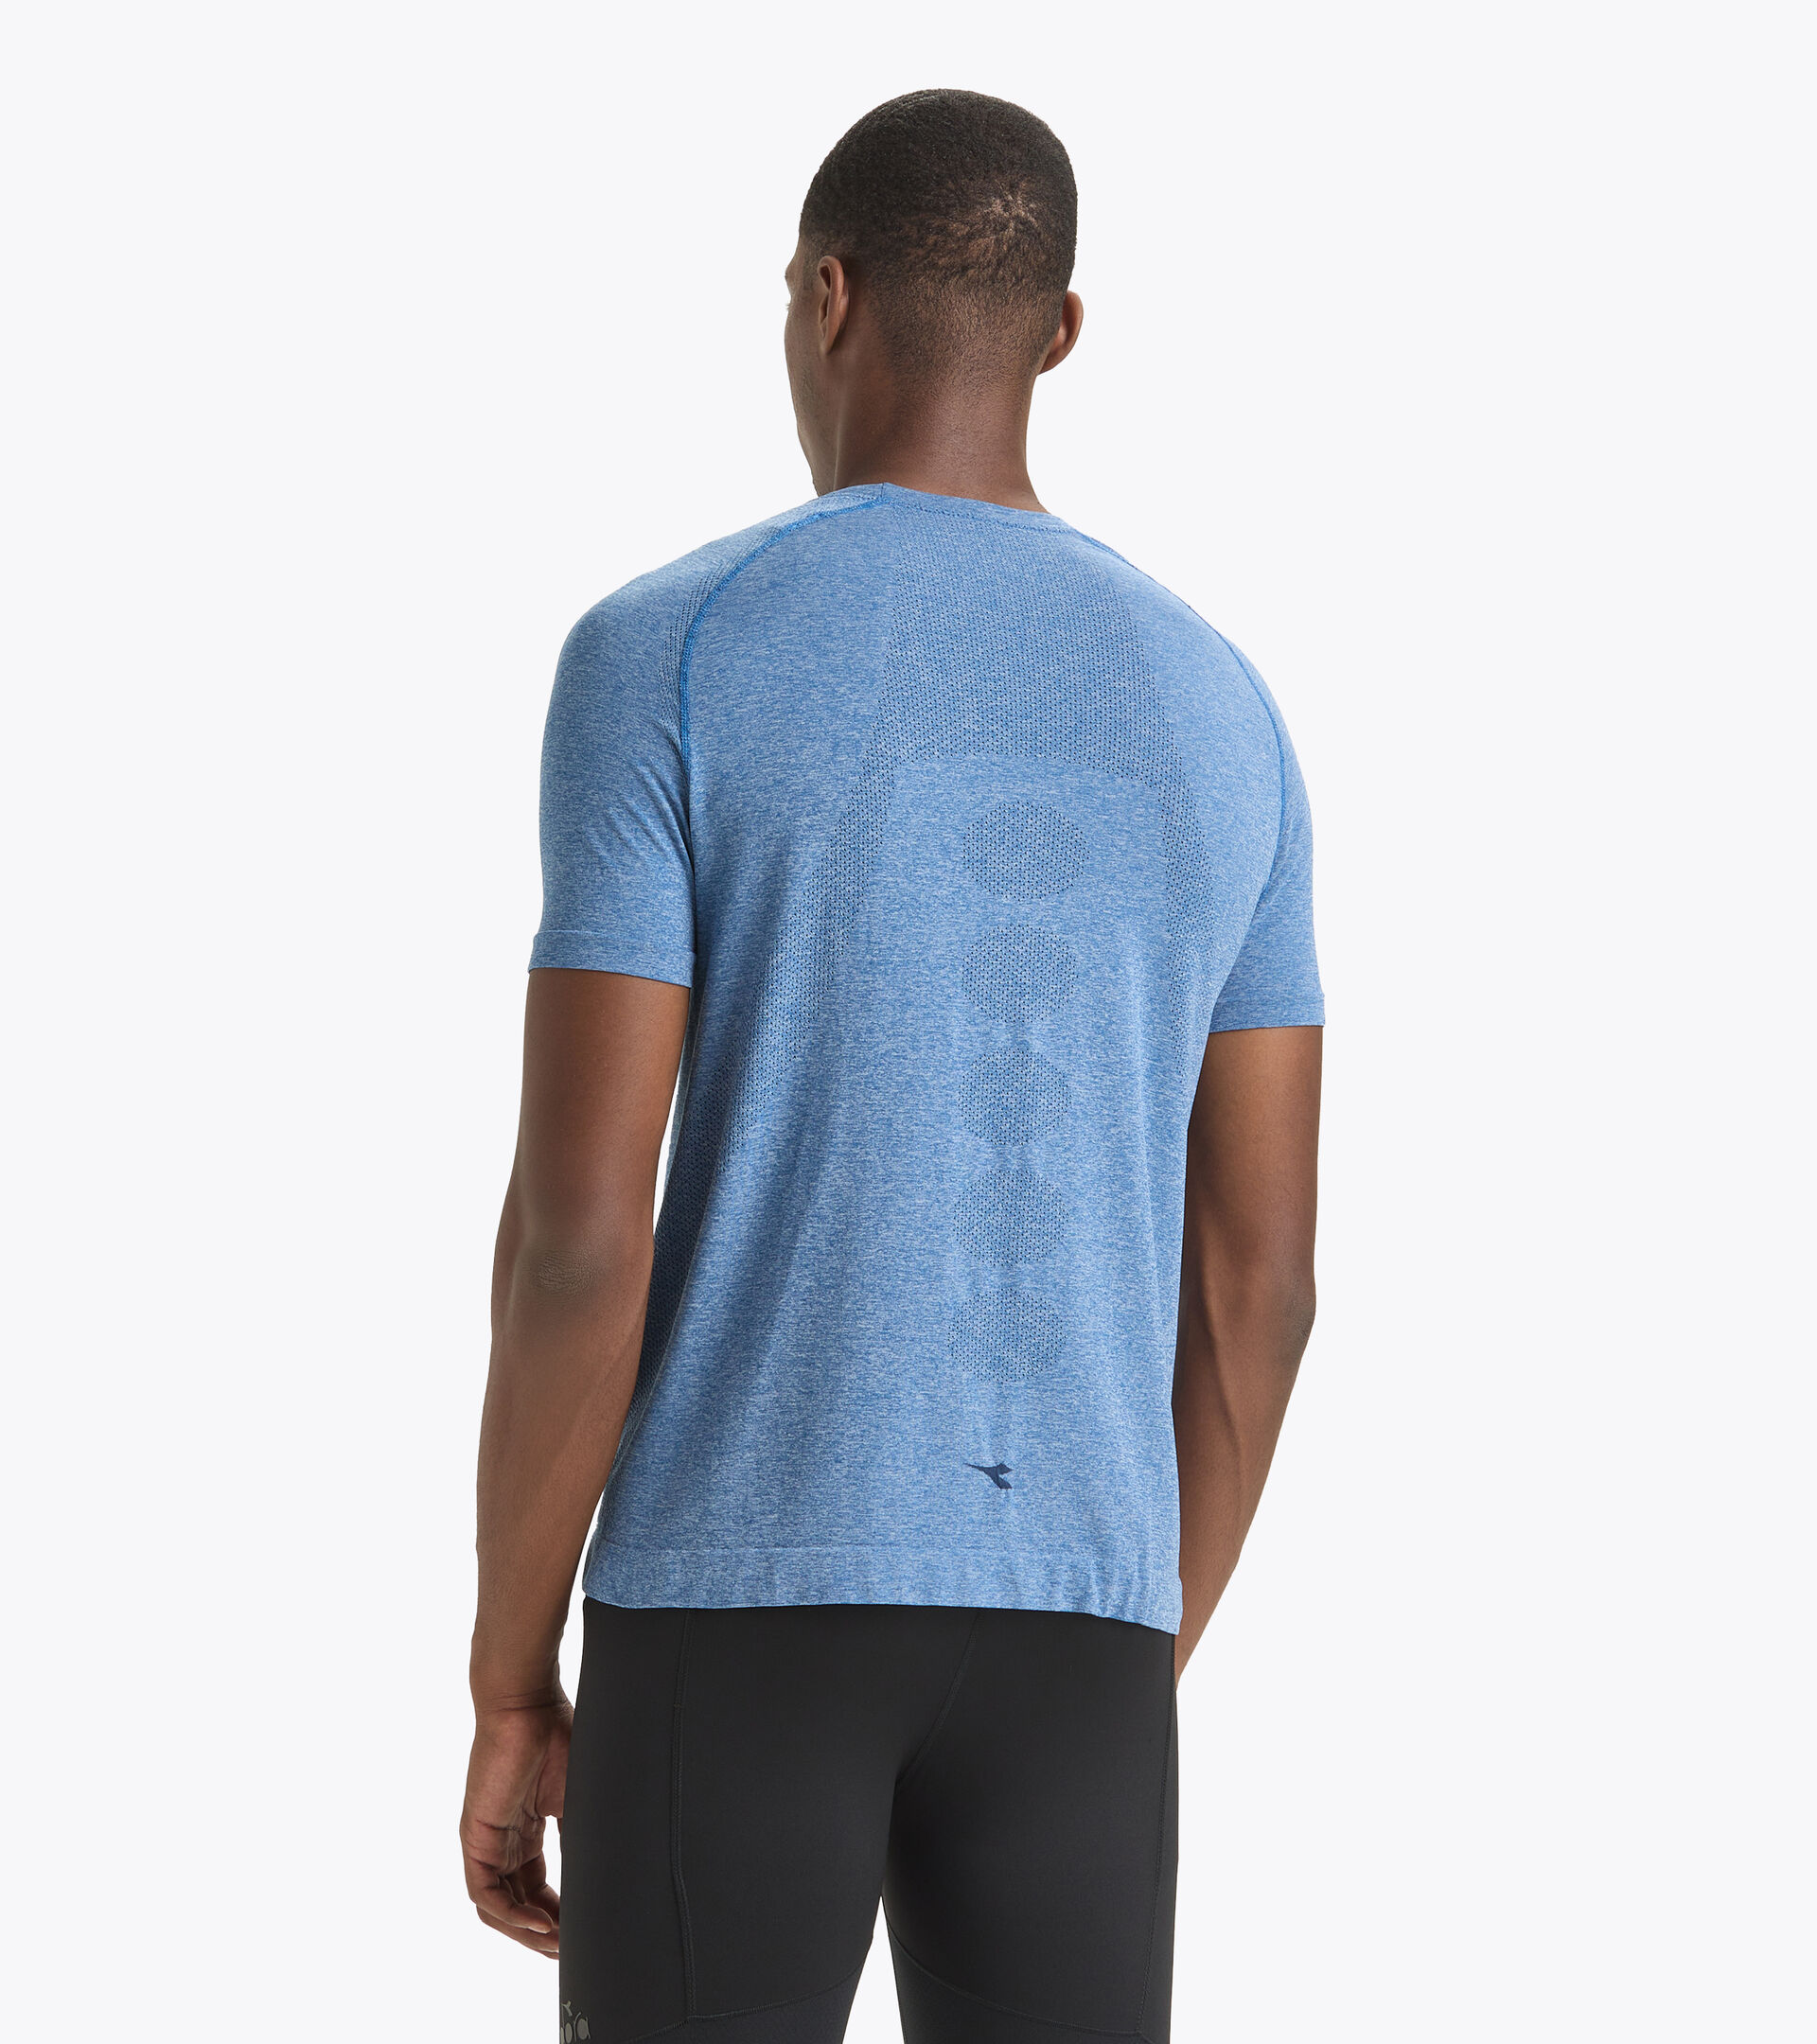 Sports t-shirt - Made in Italy - Men SS T-SHIRT SKIN FRIENDLY DUTCH BLUE - Diadora